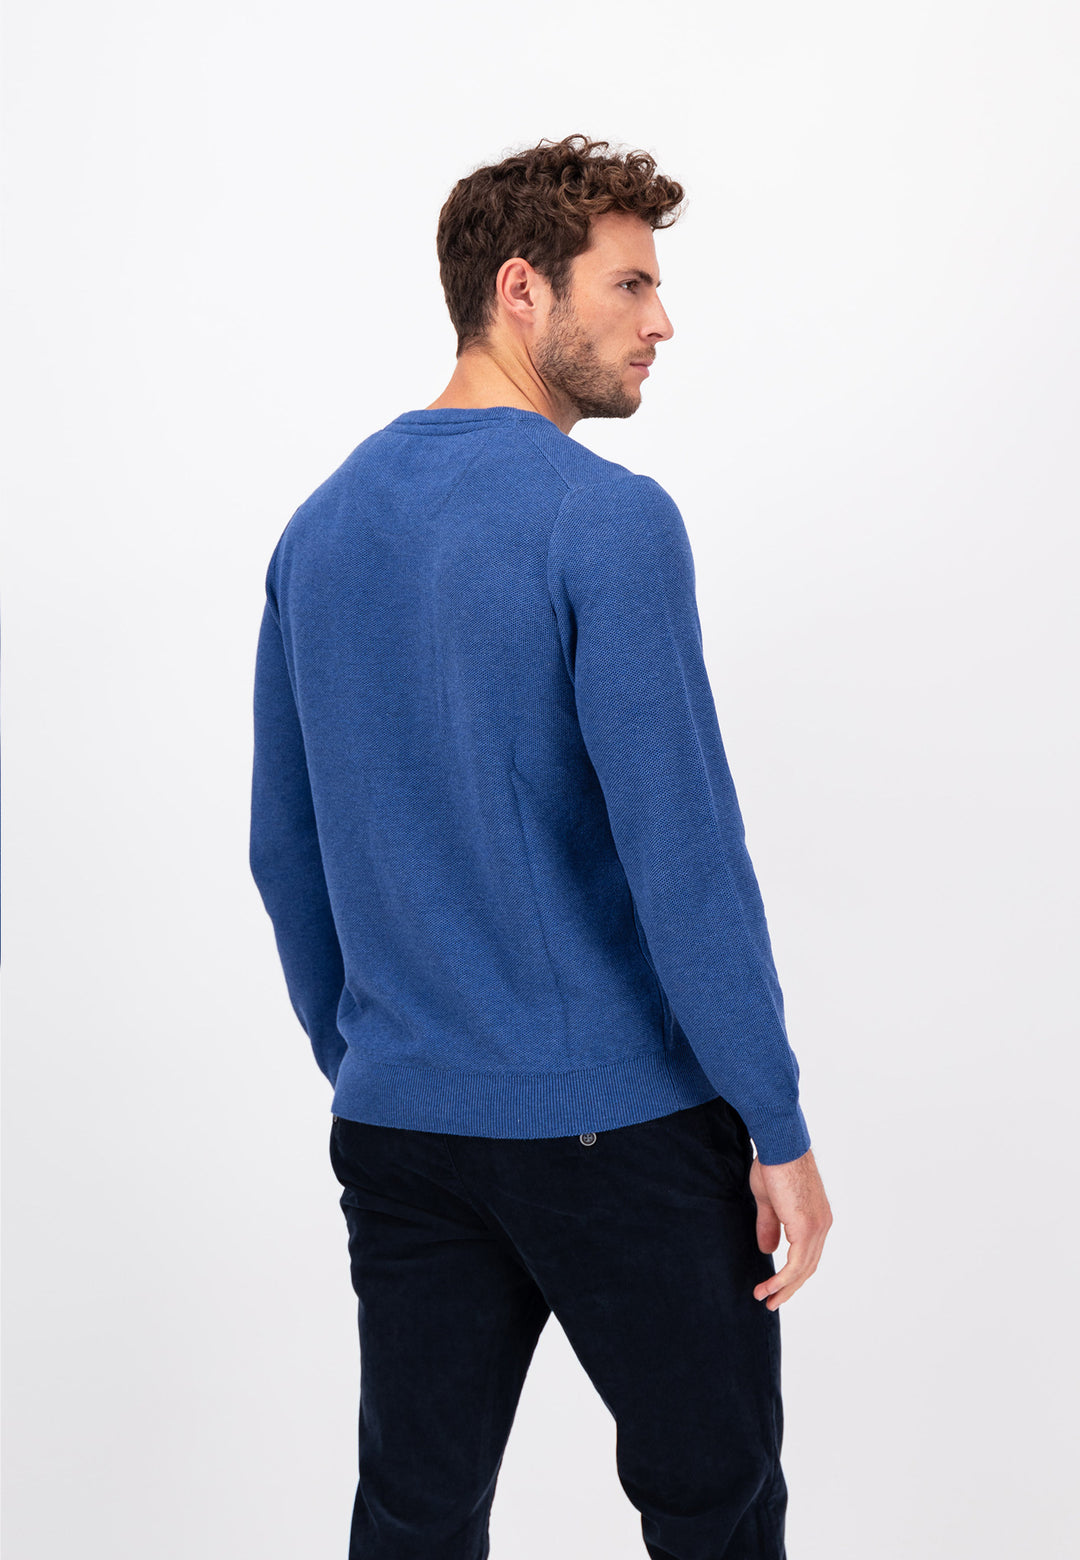 Structure knit Shop | Online FYNCH-HATTON sweater – Offizieller